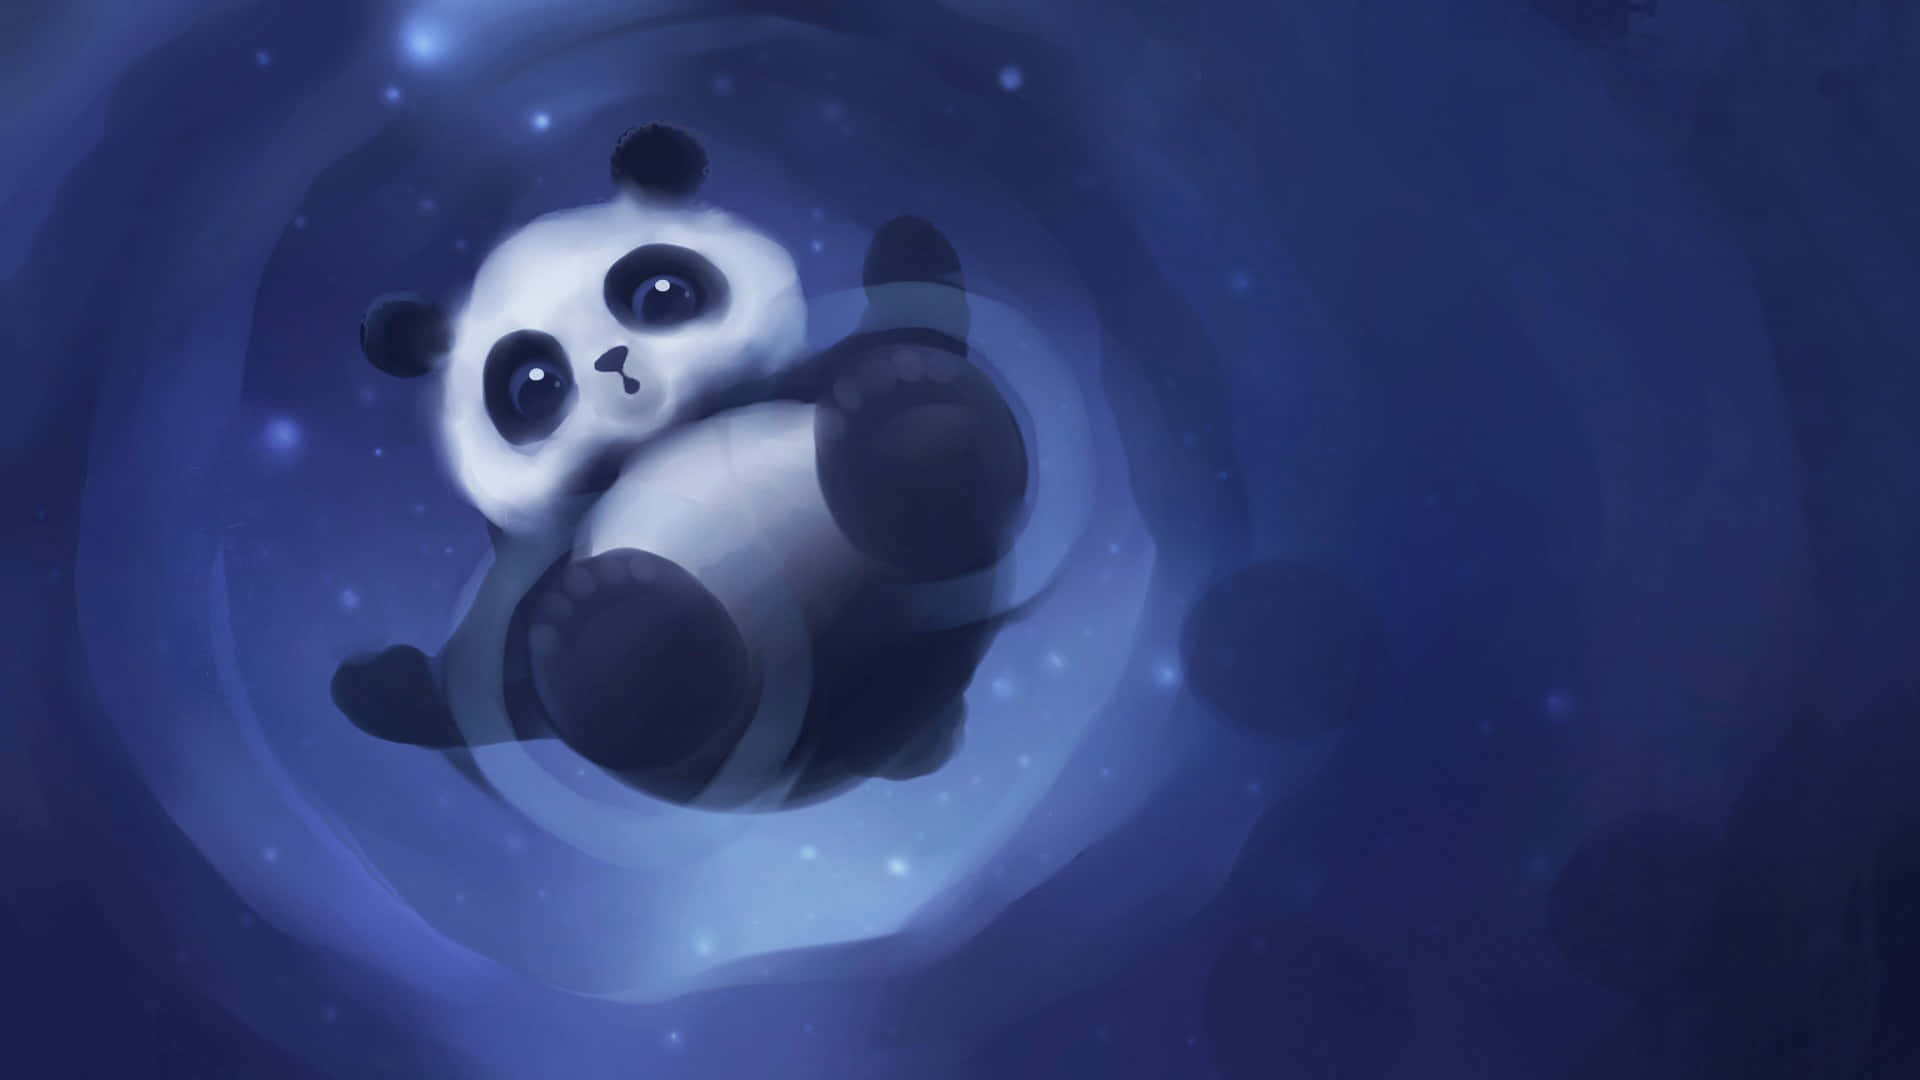 Download Cute Cartoon Panda Blue Swirl Wallpaper 